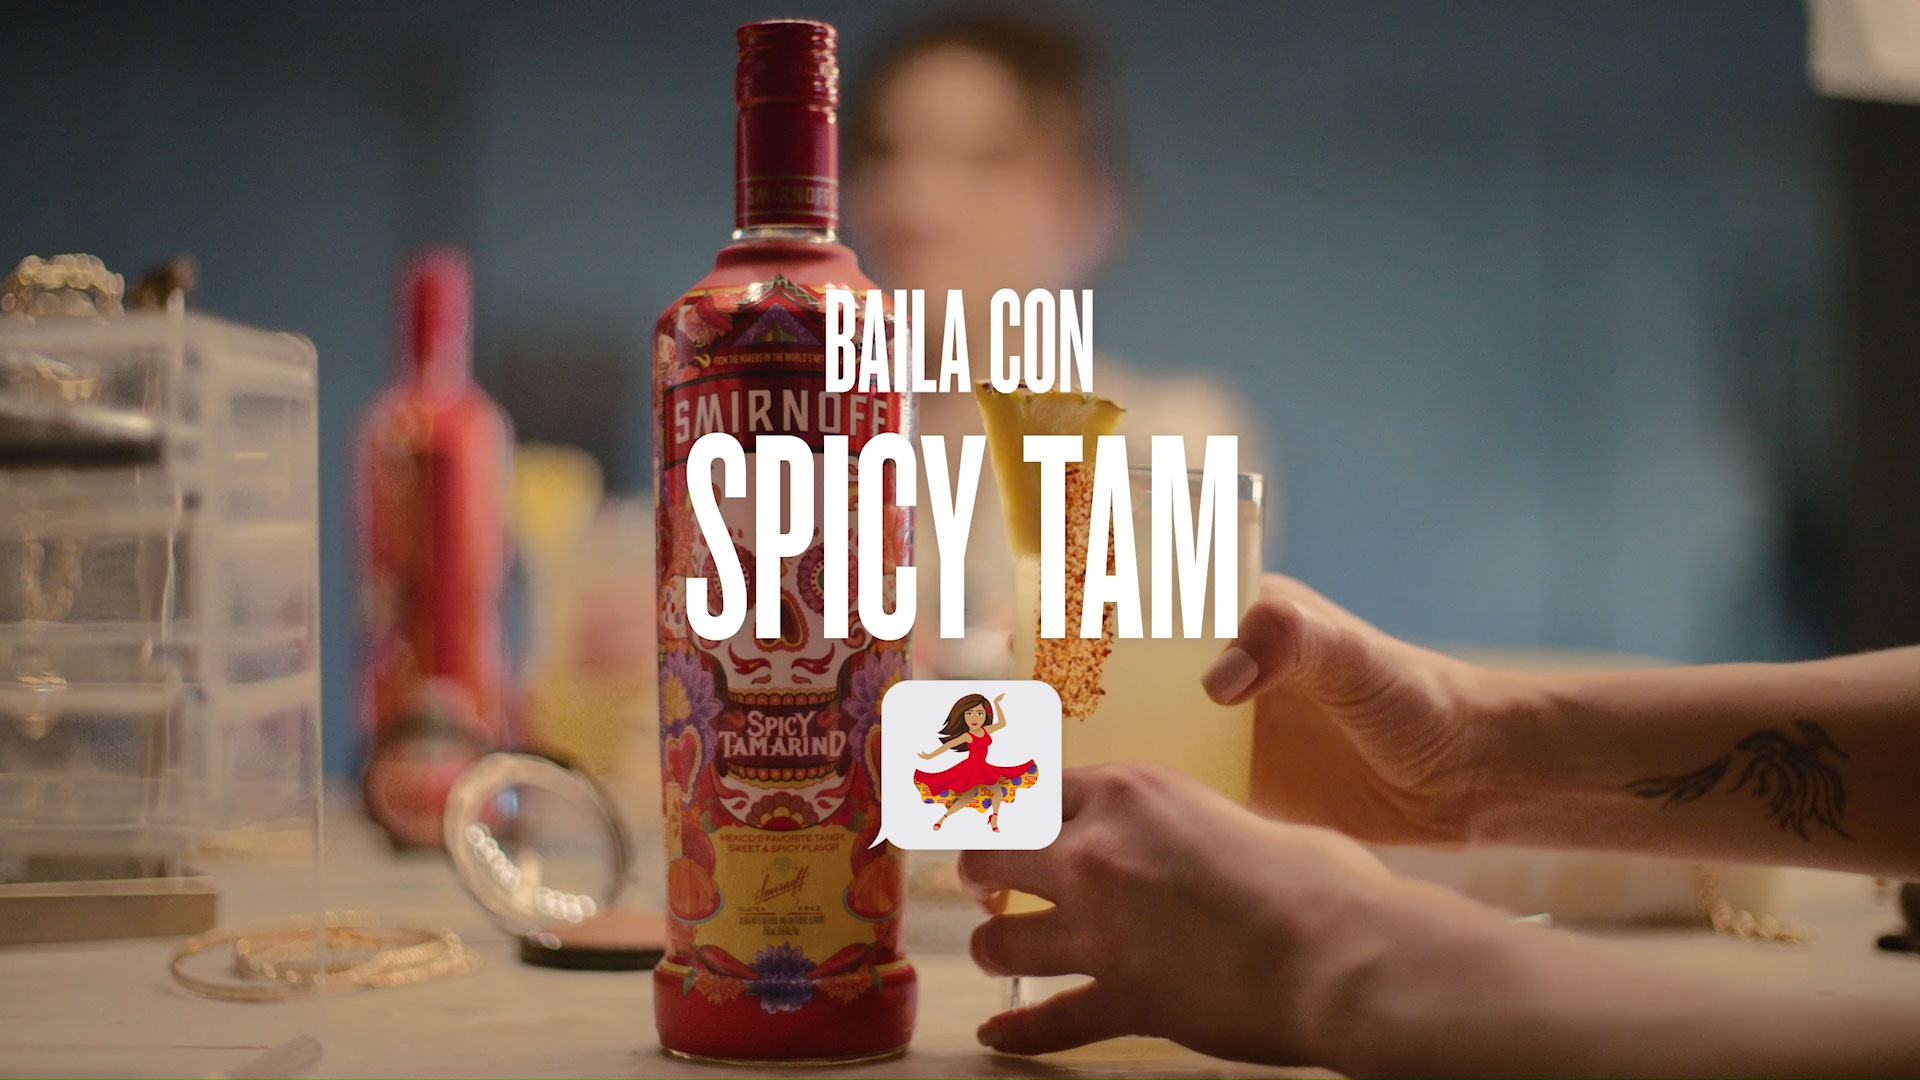 Meet Spicy Tam, The Emoji Dancing Her Way From Digital Screens To IRL Scenes As The New Face Of Smirnoff Spicy Tamarind